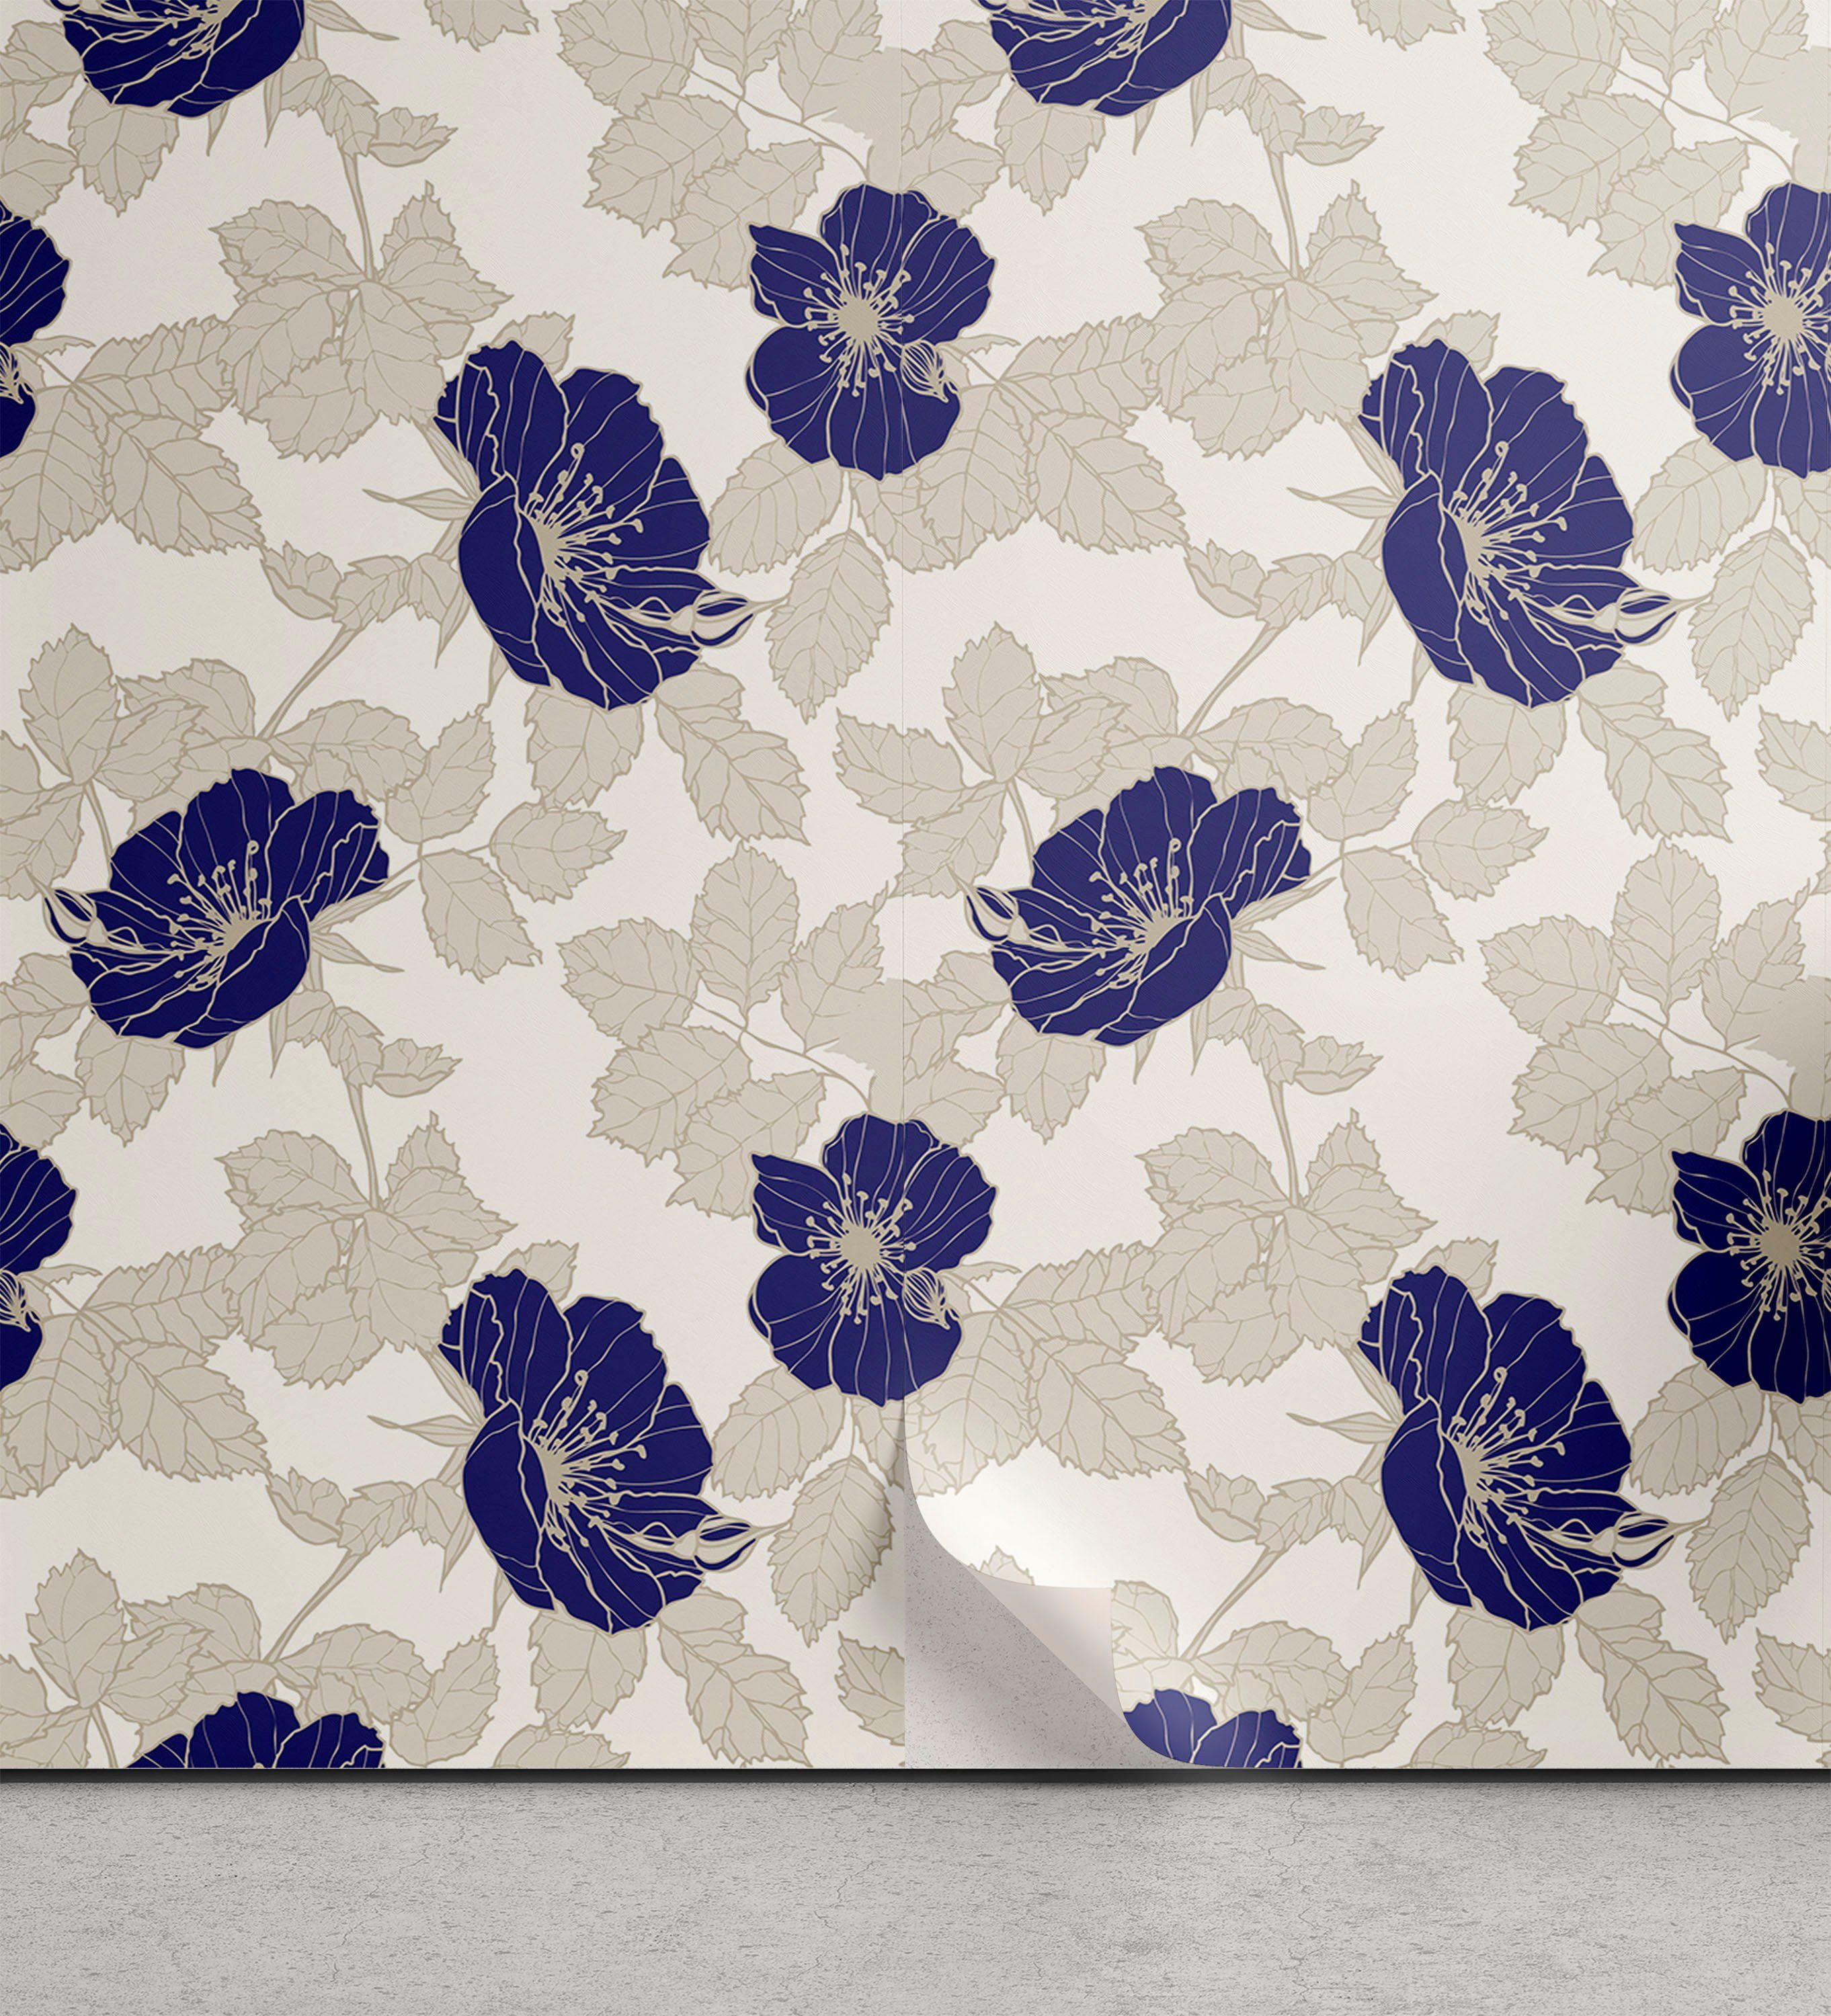 Abakuhaus Vinyltapete selbstklebendes Wohnzimmer Küchenakzent, Blume Blooming Hund Rosen-Blätter